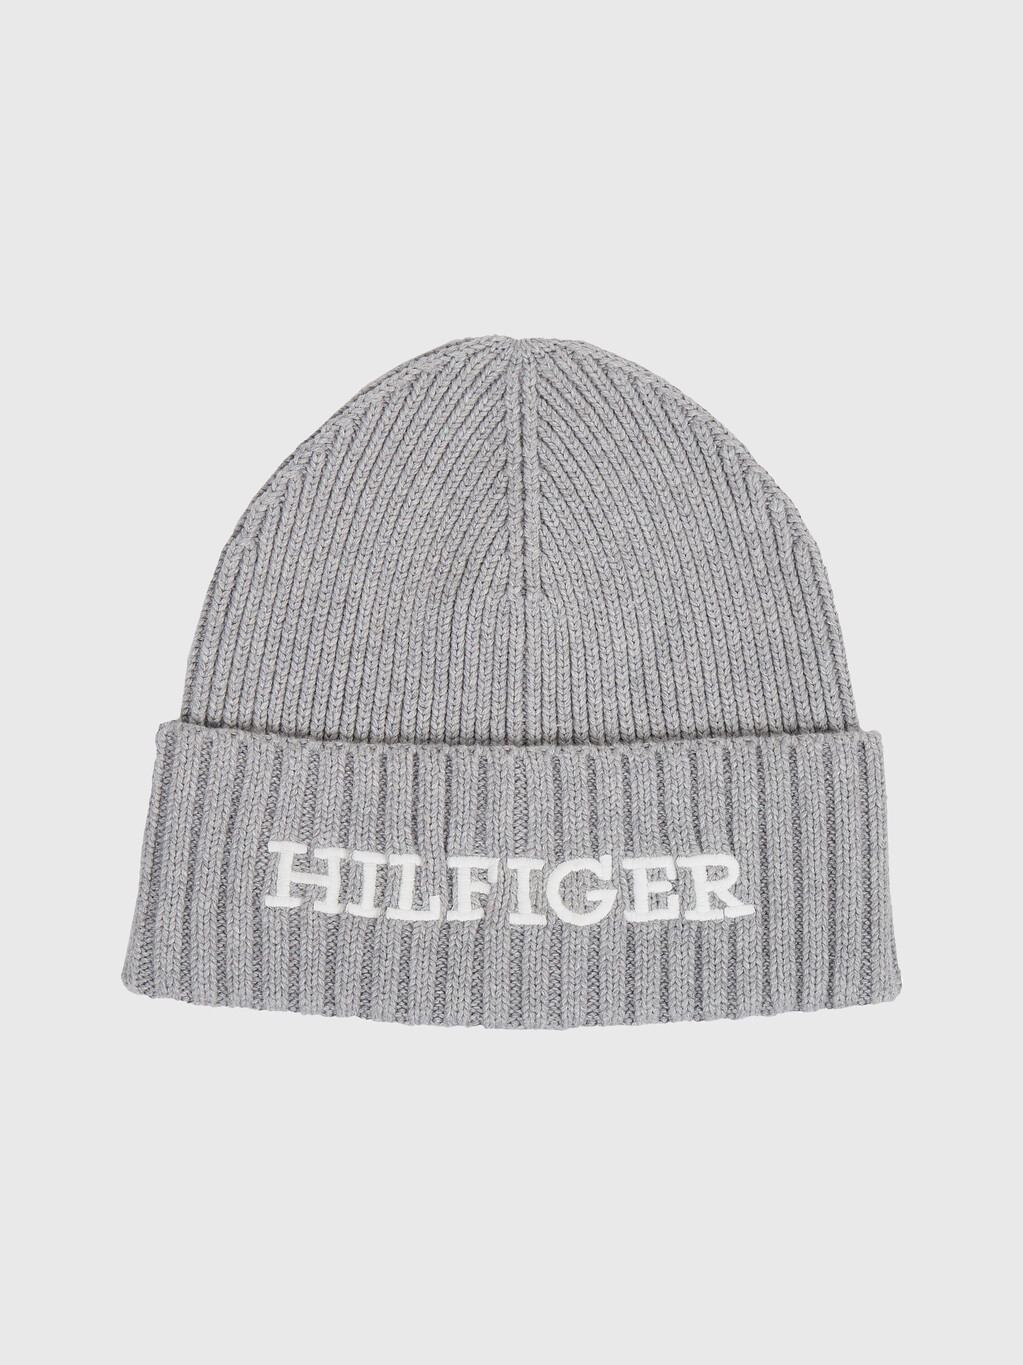 Hilfiger Monotype 標誌刺繡毛帽, Grey Melange, hi-res